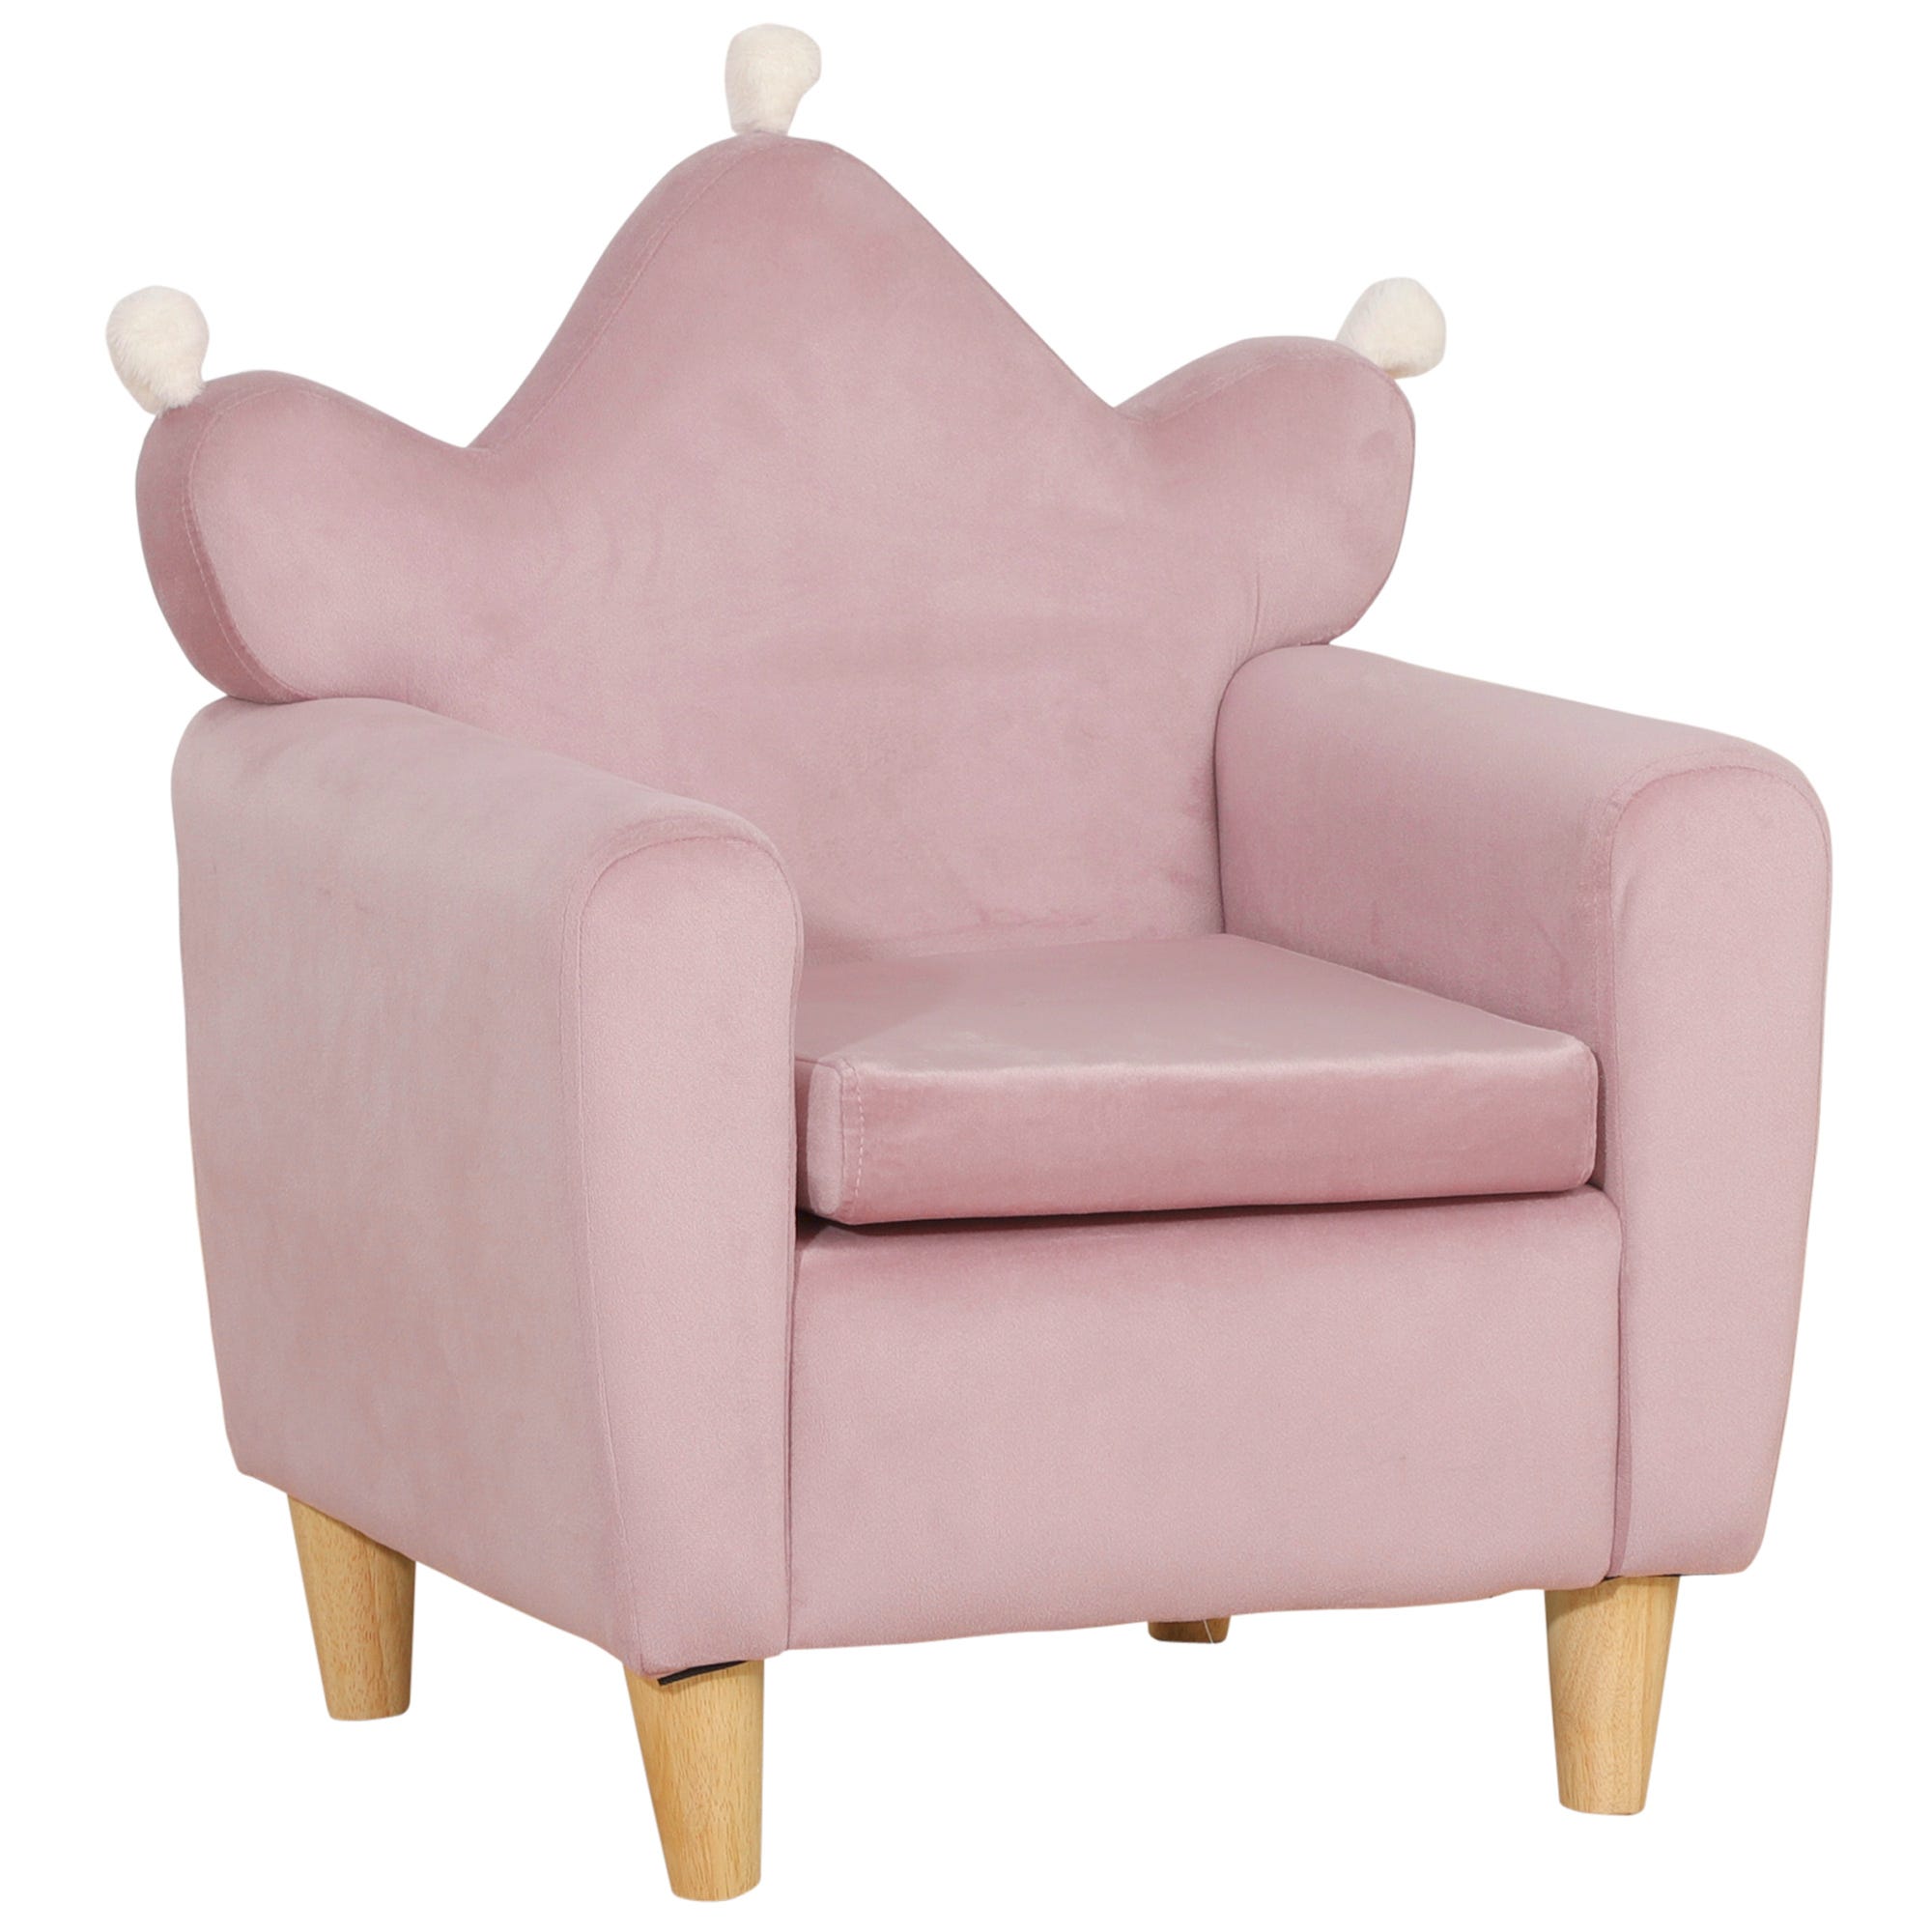 Sillón infantil mini sofá para niños de +3 años HOMCOM 50x42x58cm rosa